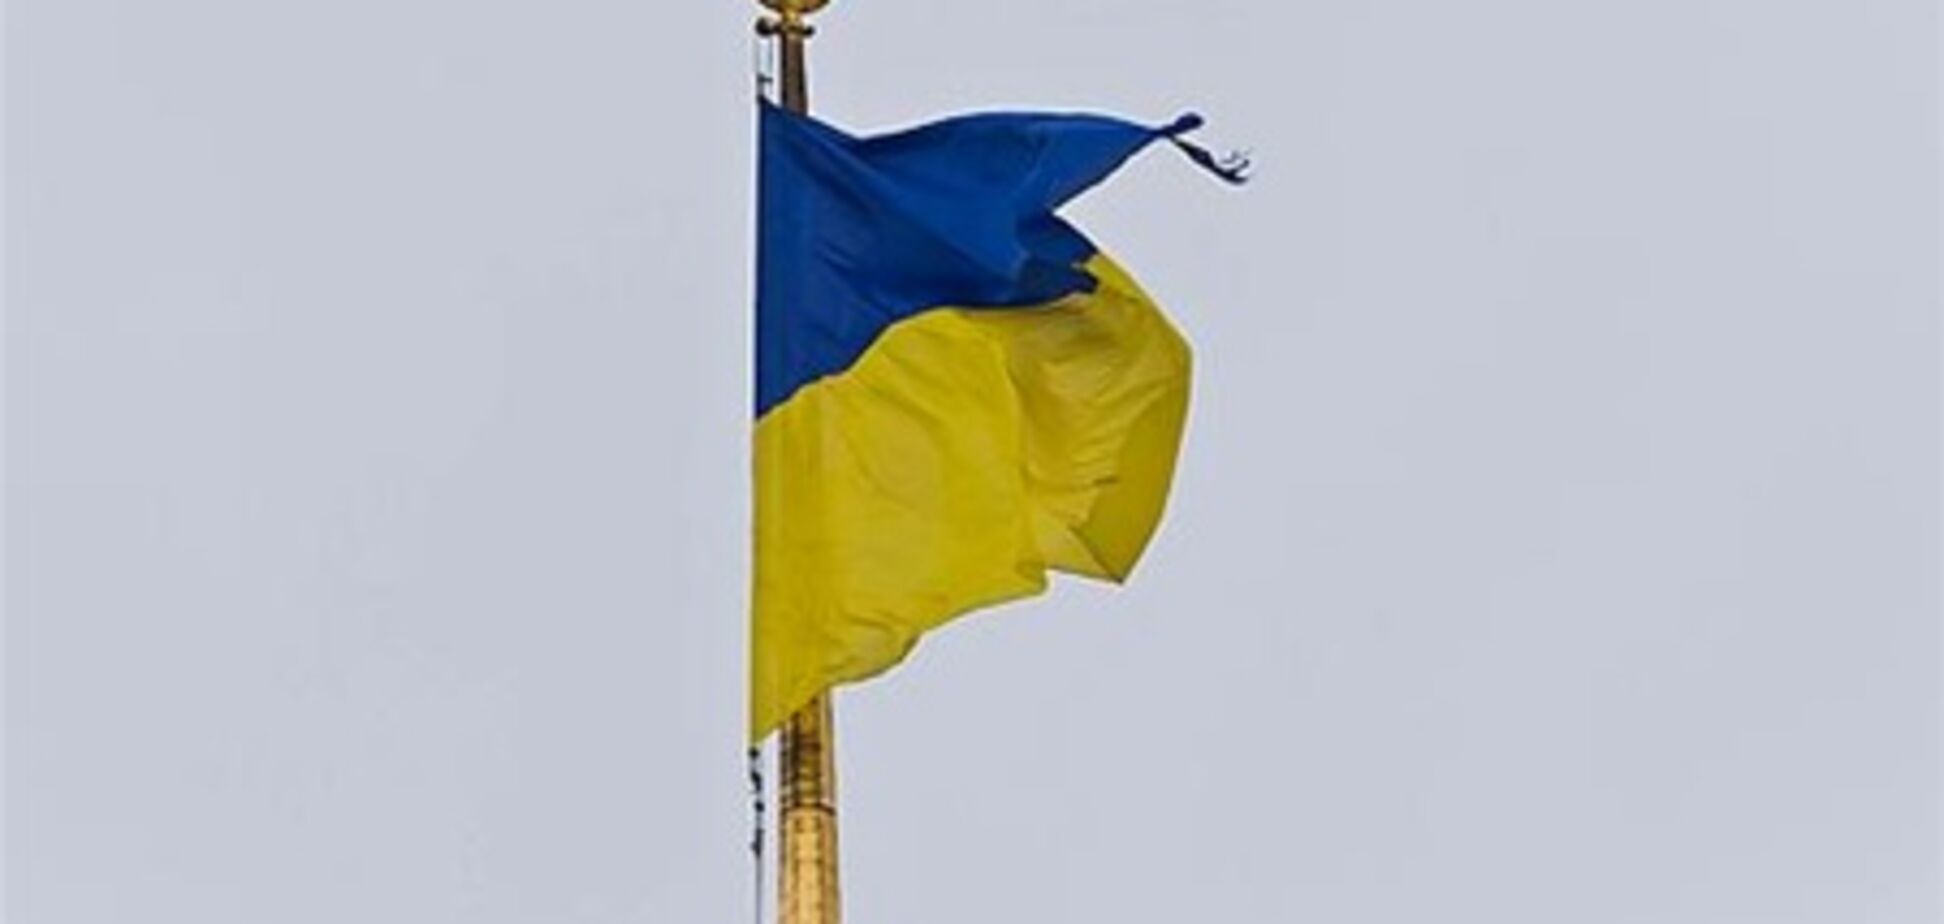 Над Радой развевается надорванный флаг Украины. Фото